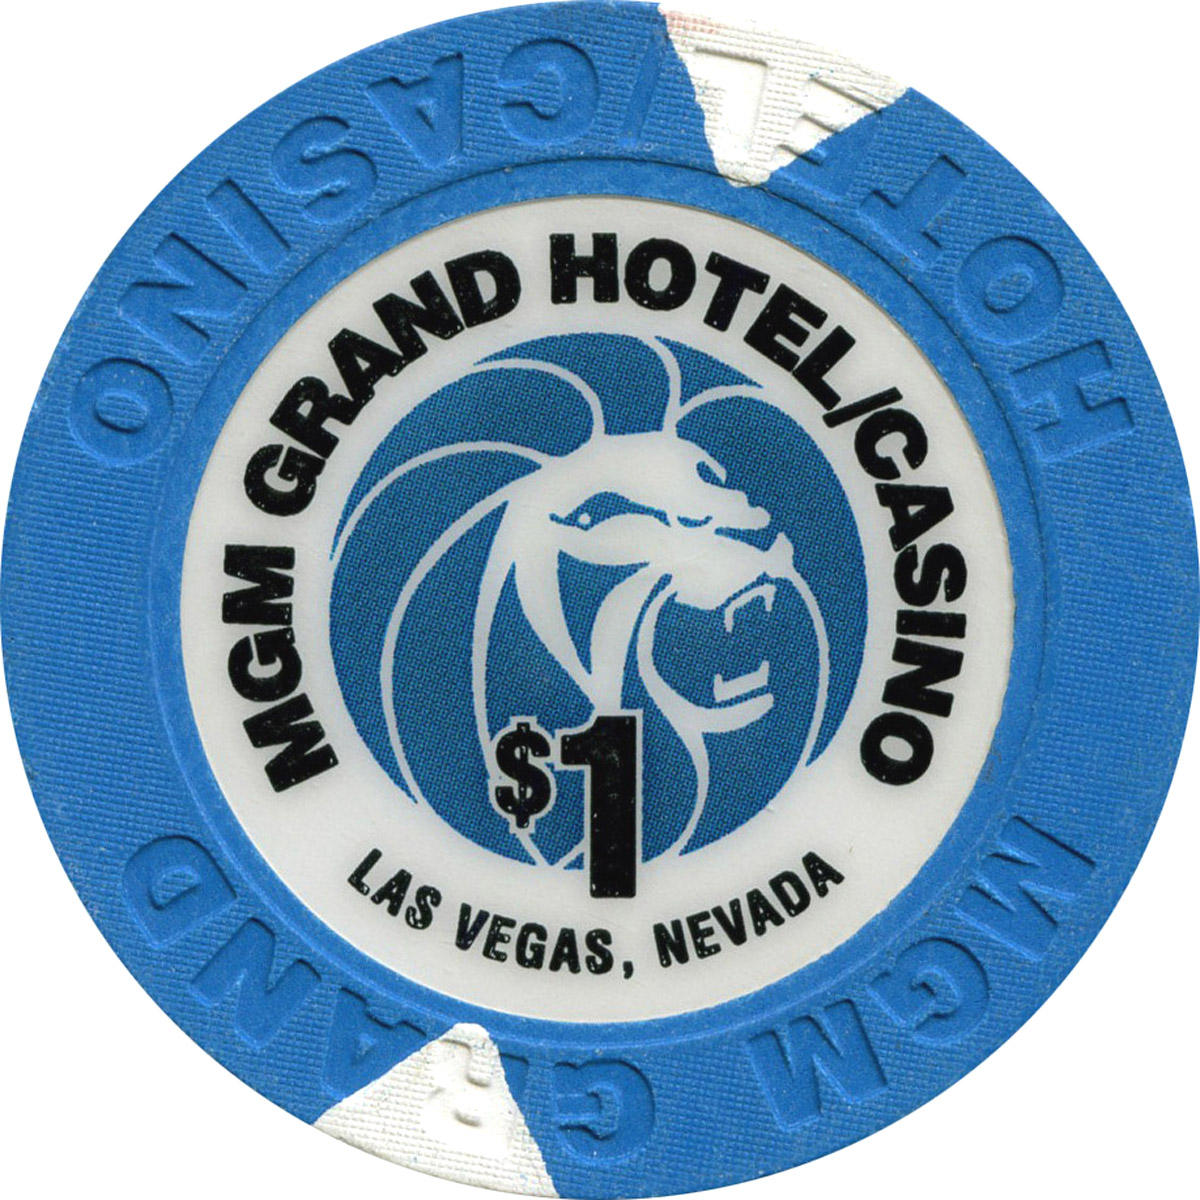 mgm grand hotel casino chips 5